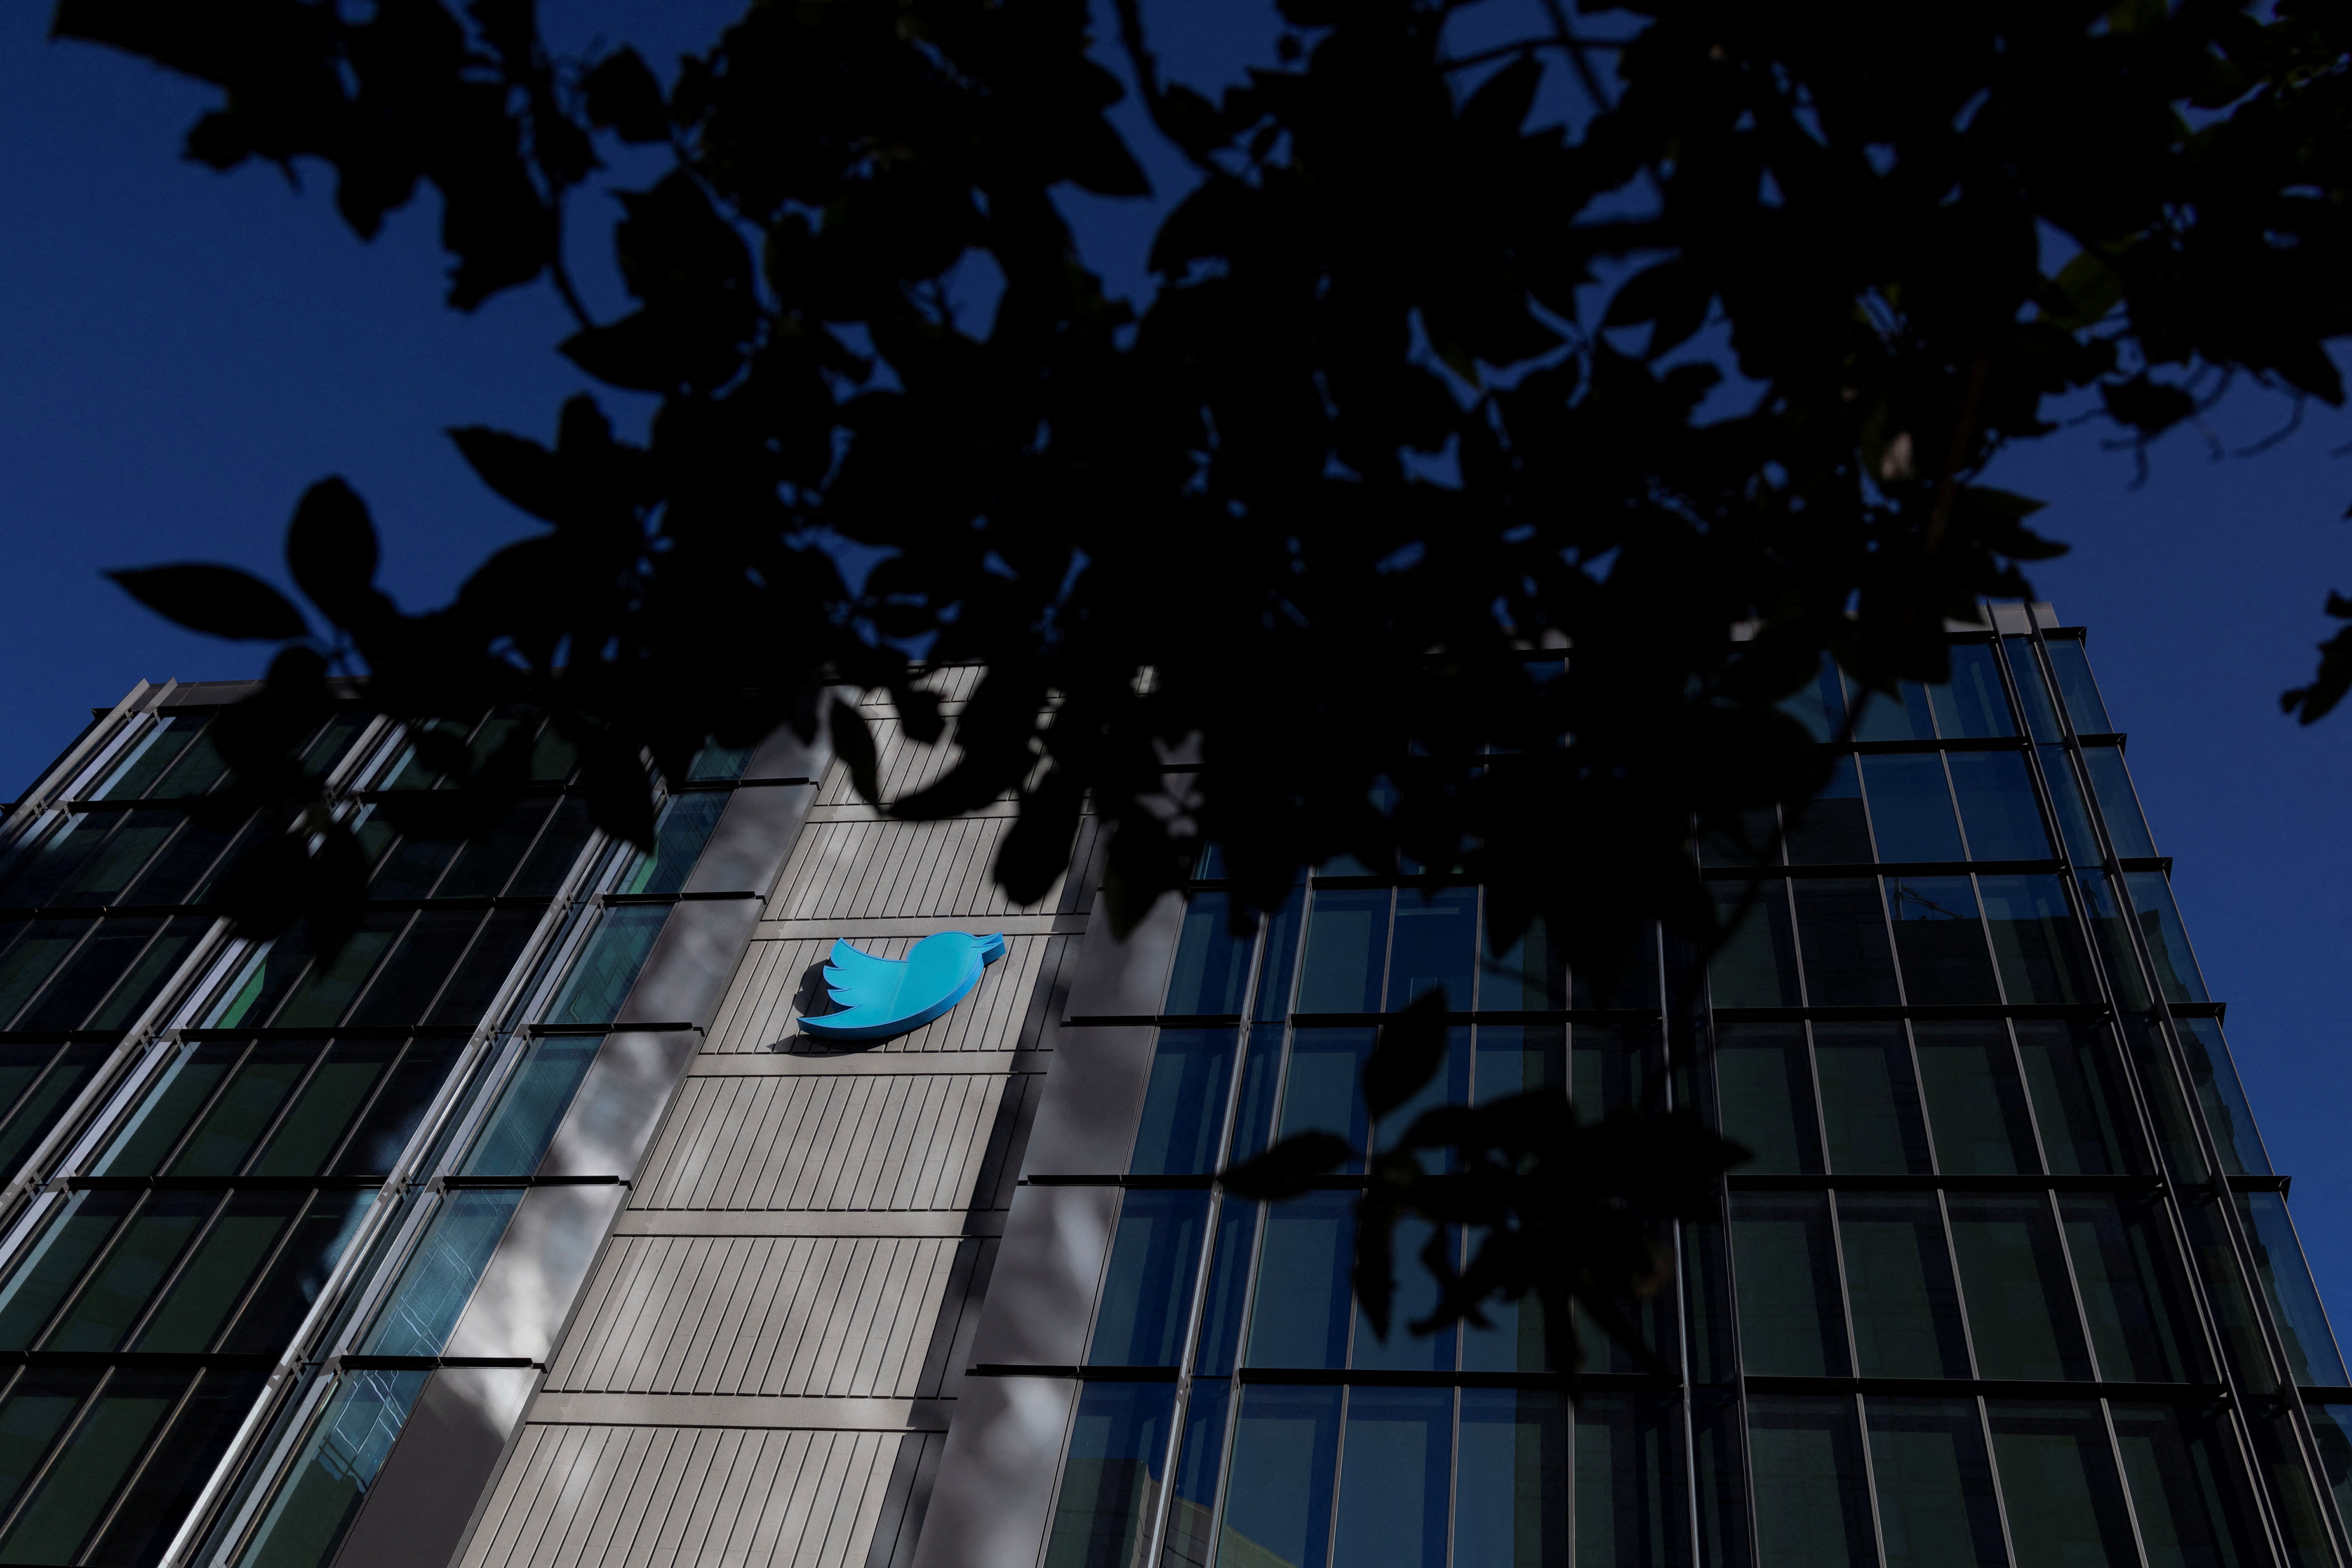 Twitter's corporate headquarters are in San Francisco, California